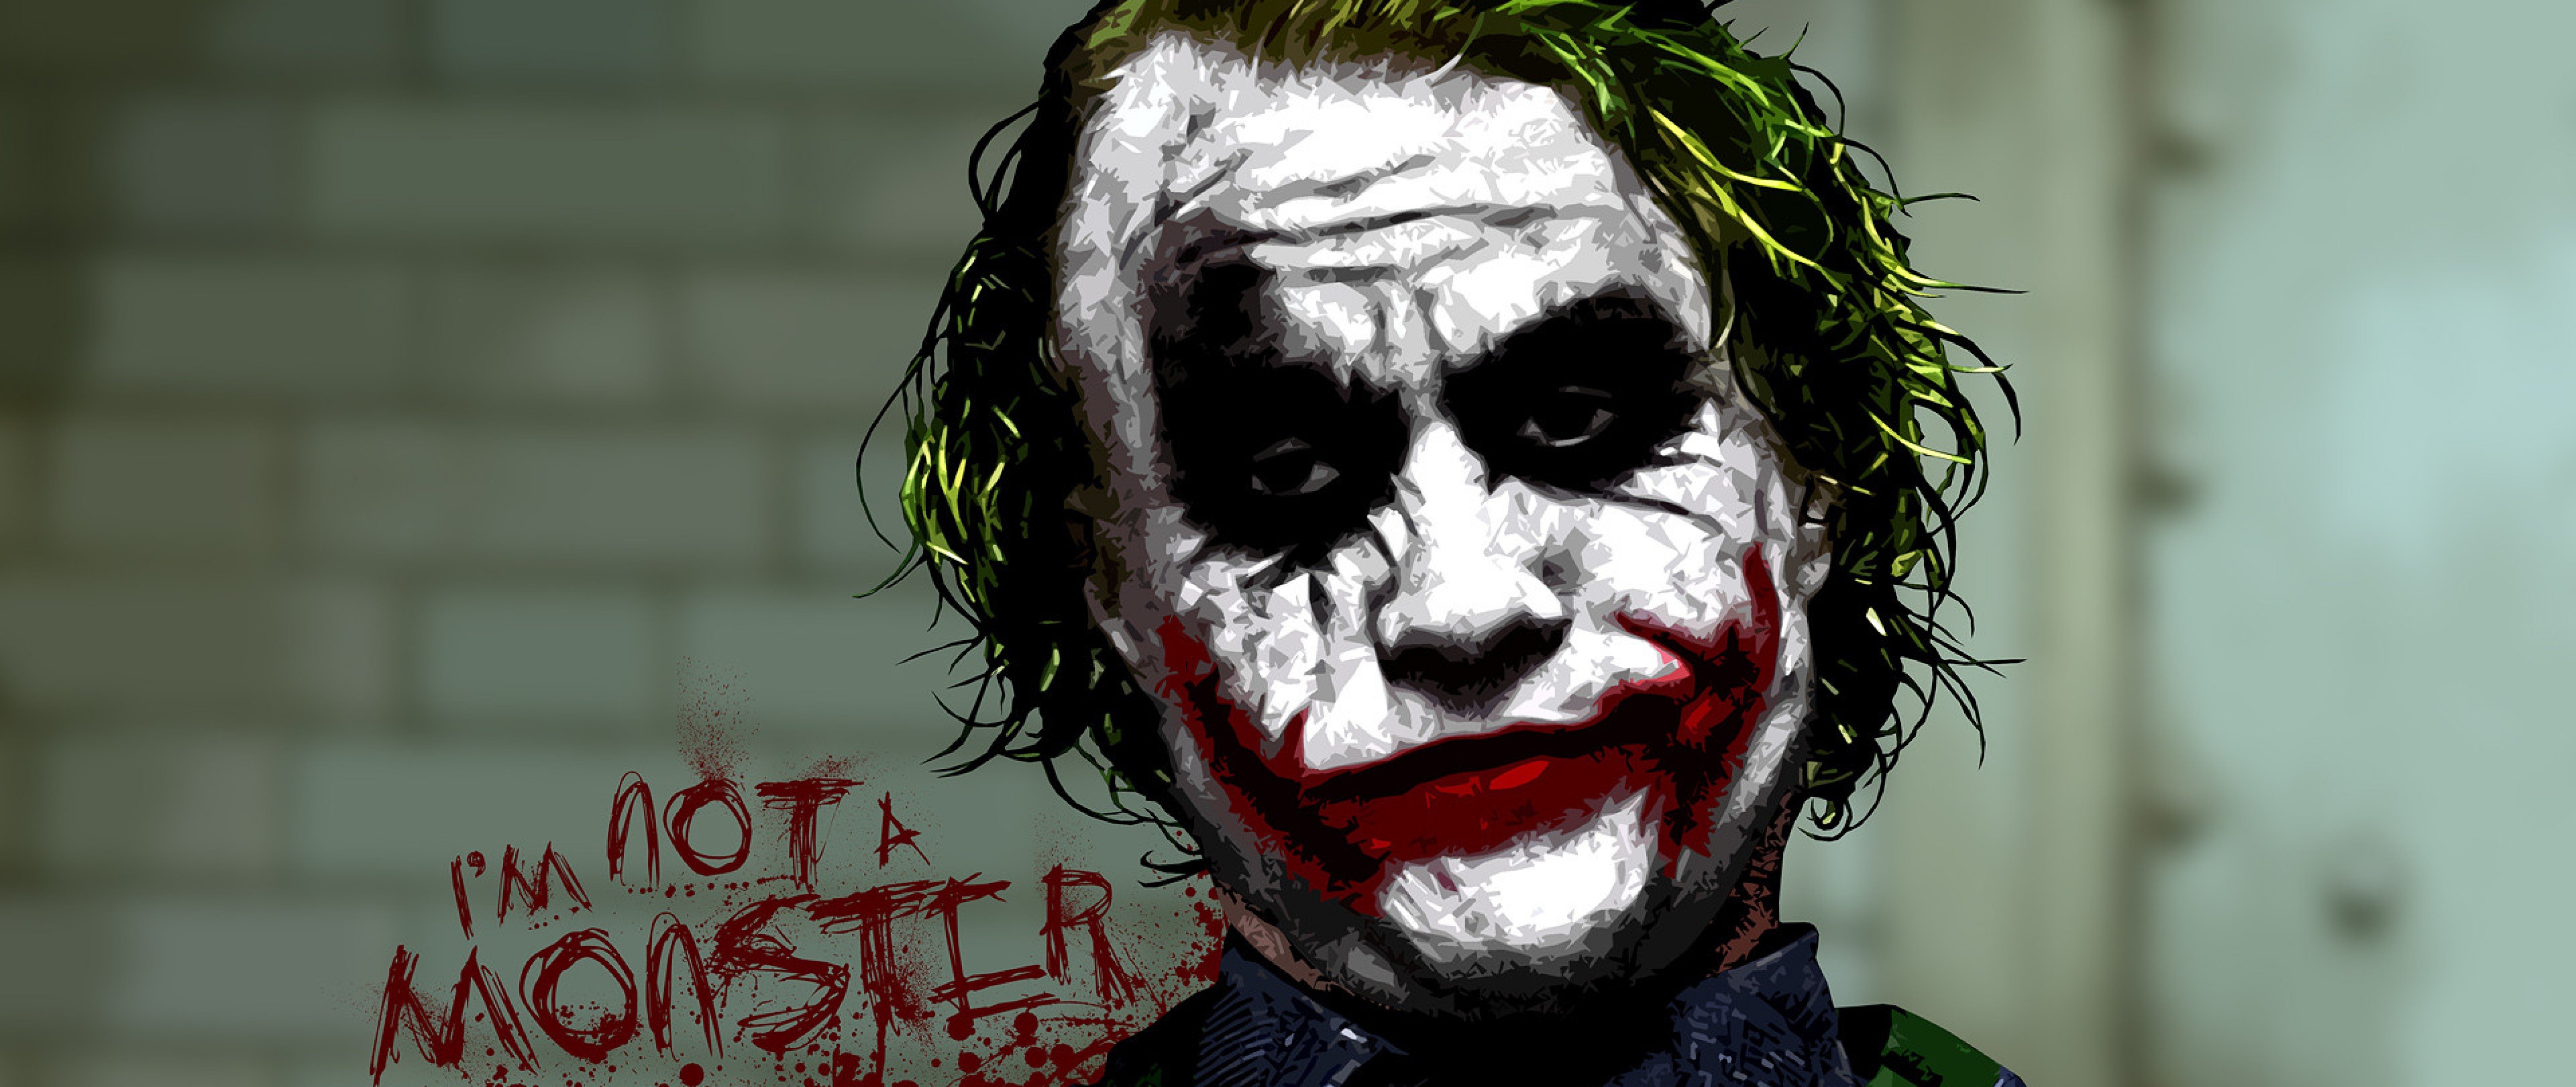 Joker 4K Ultra HD Wallpapers - Wallpaper Cave